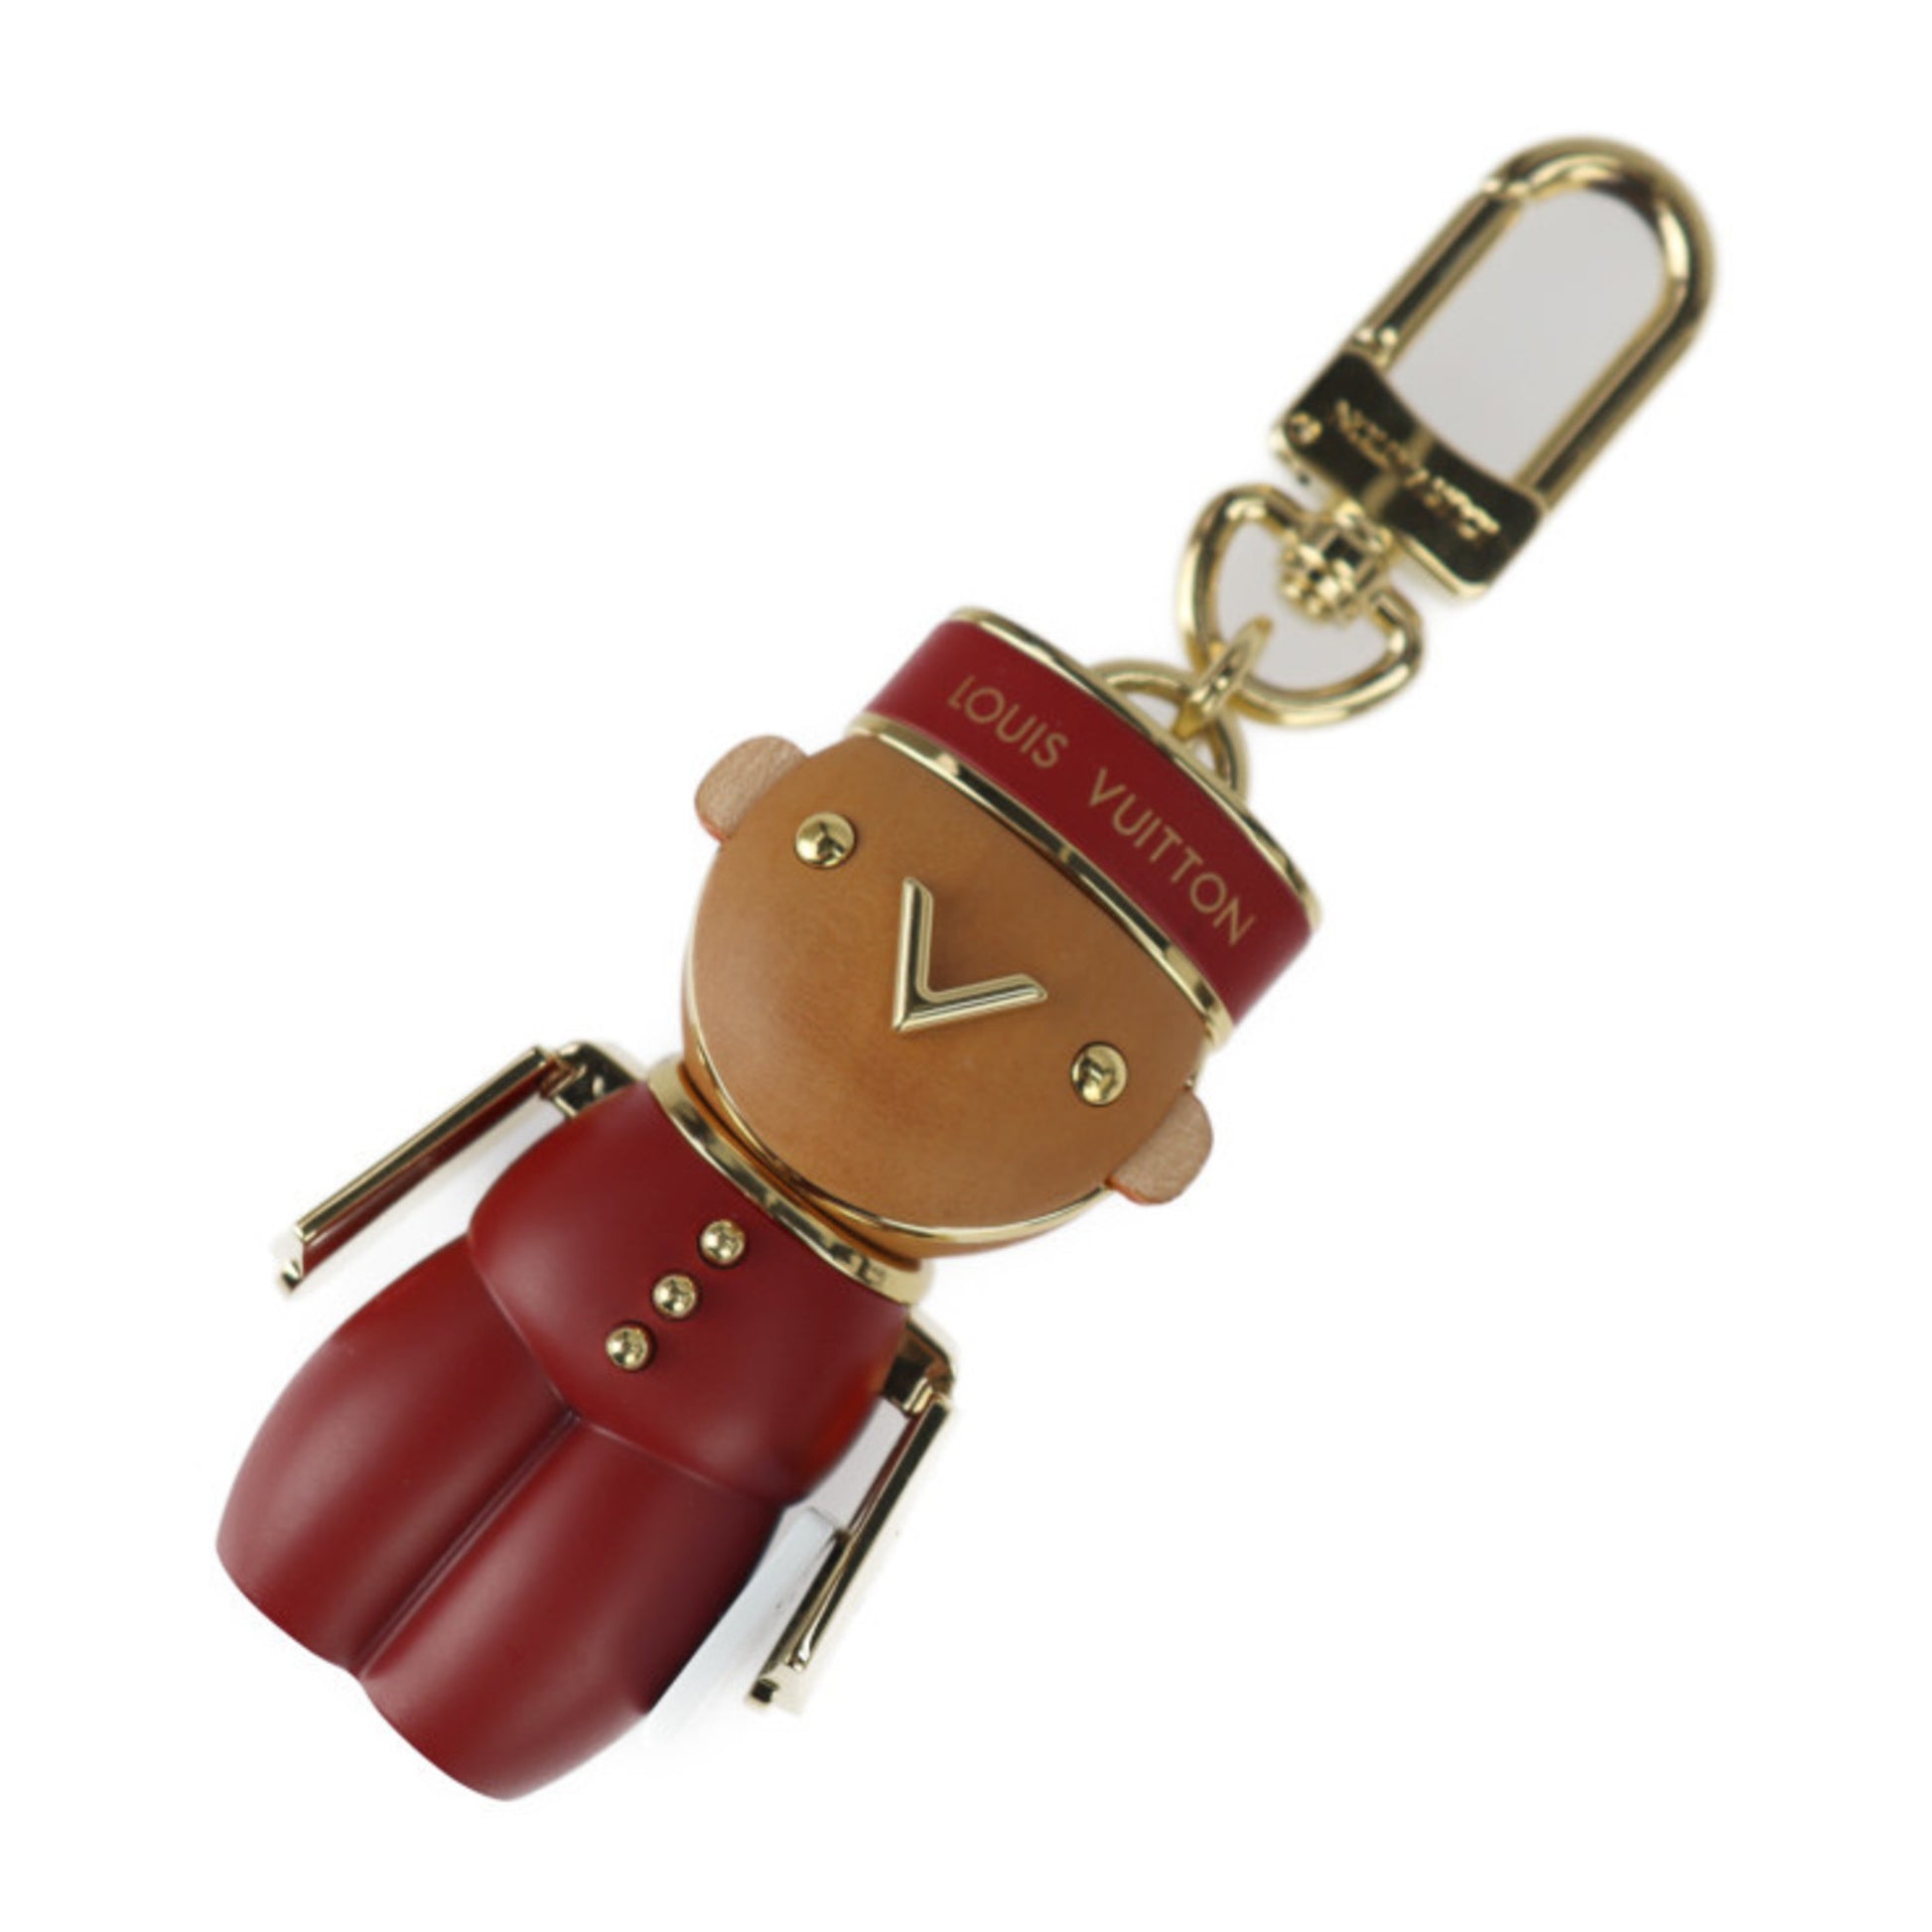 Louis Vuitton Gaston bag charm and key holder